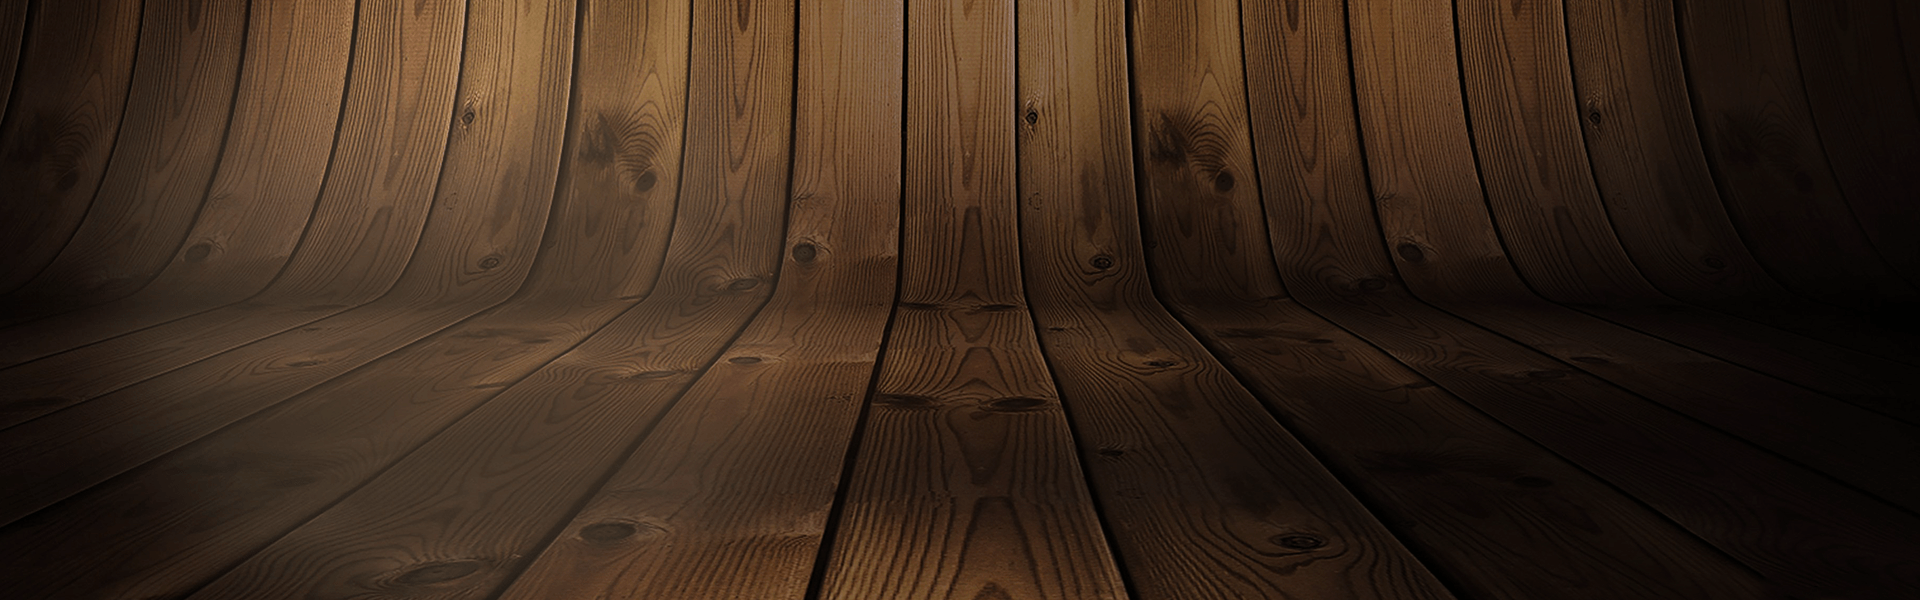 wooden-panel